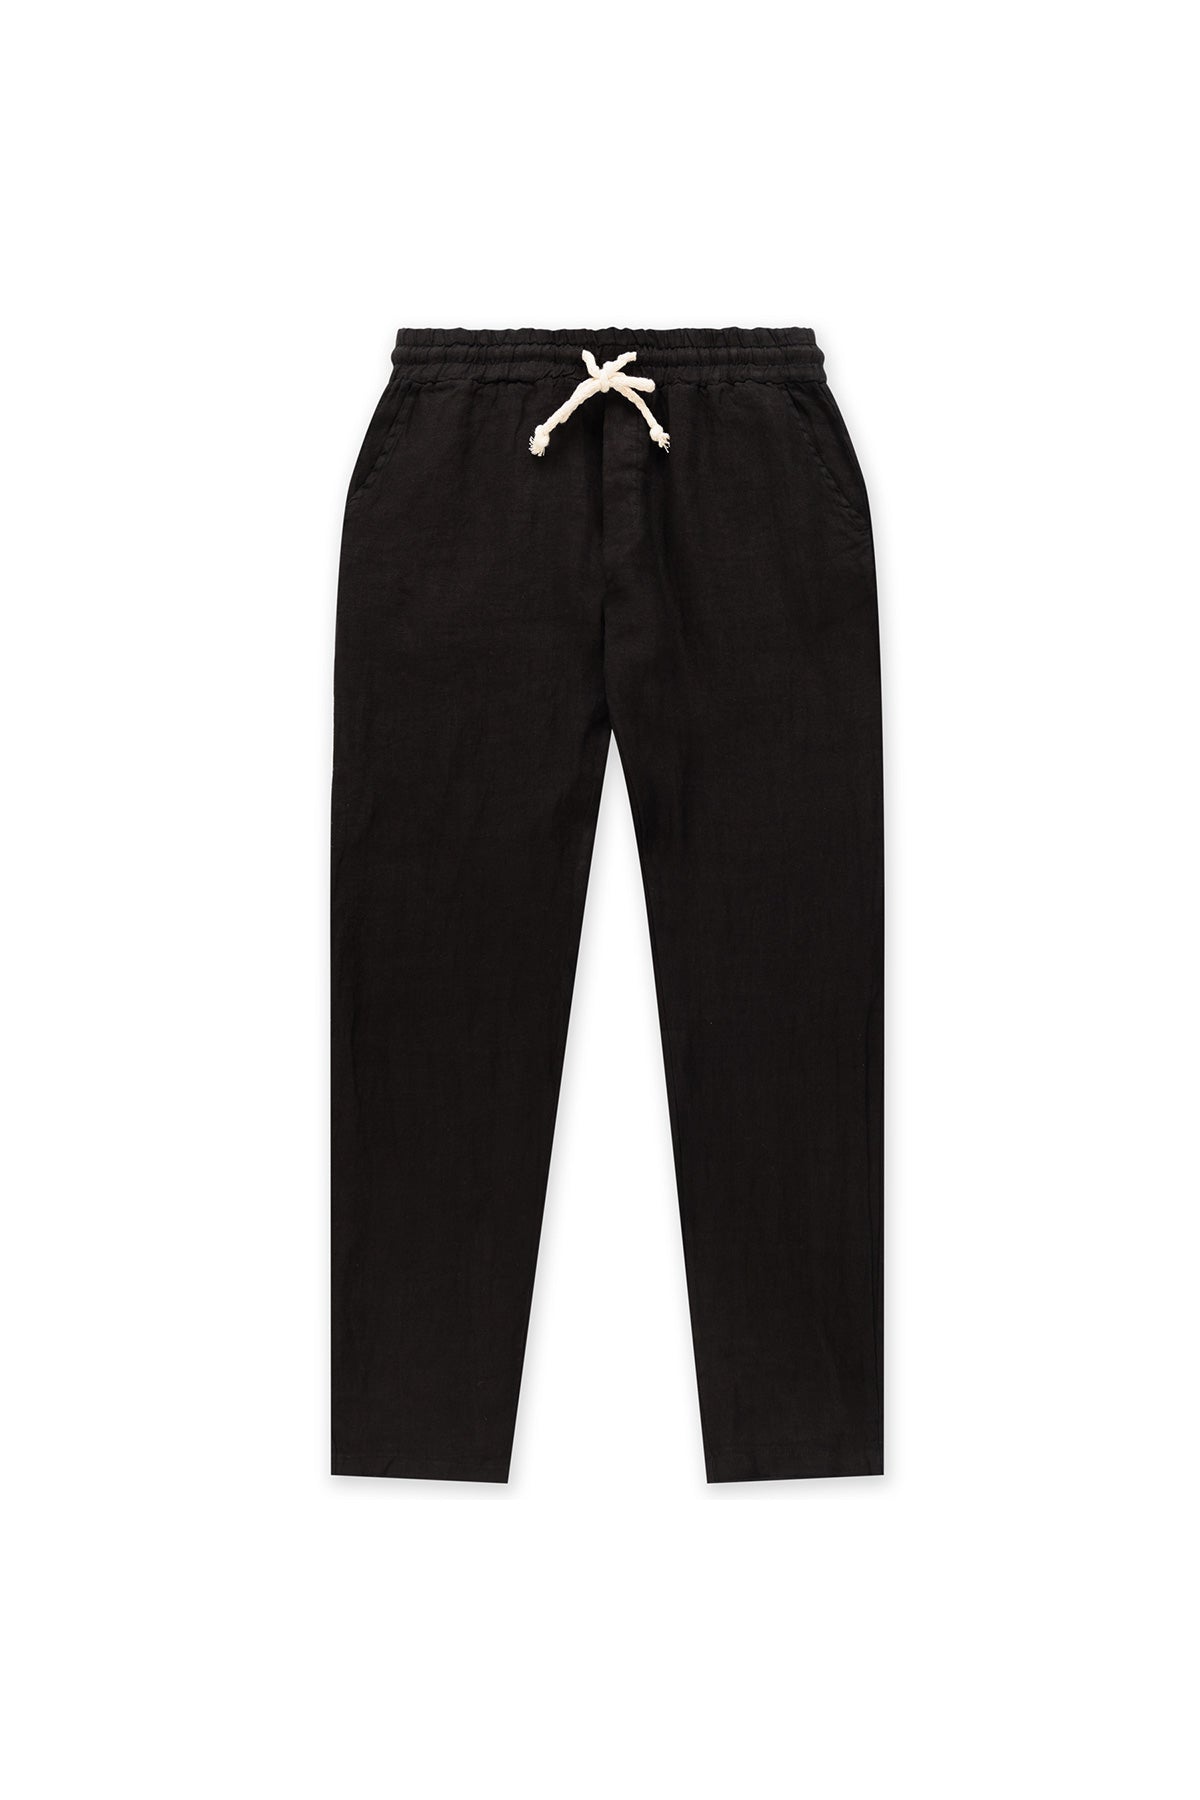 Black Premium Linen Pants - Polonio